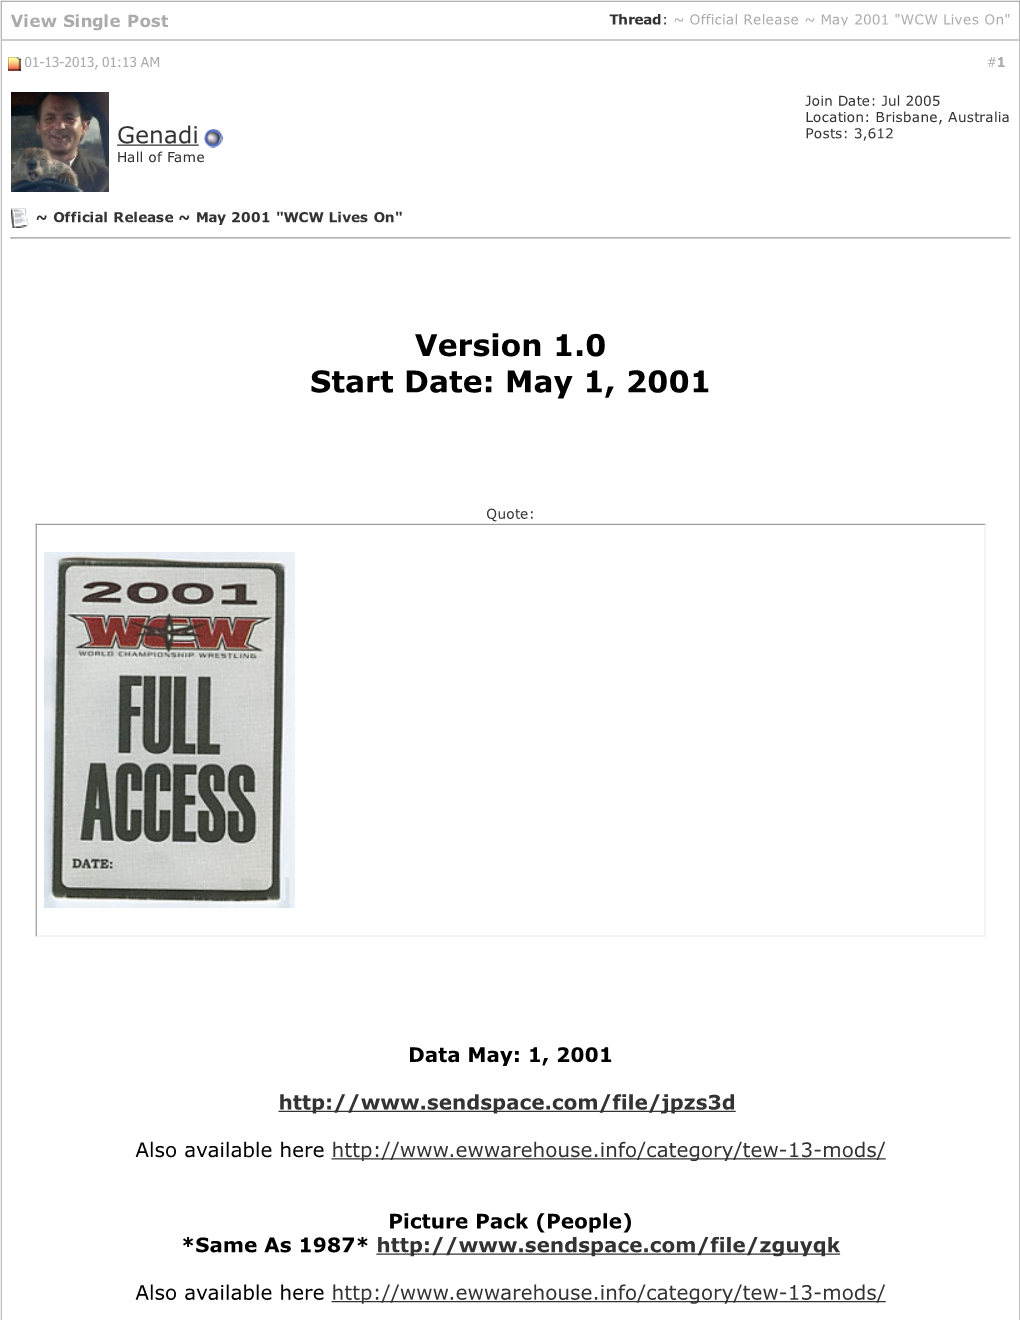 Version 1.0 Start Date: May 1, 2001